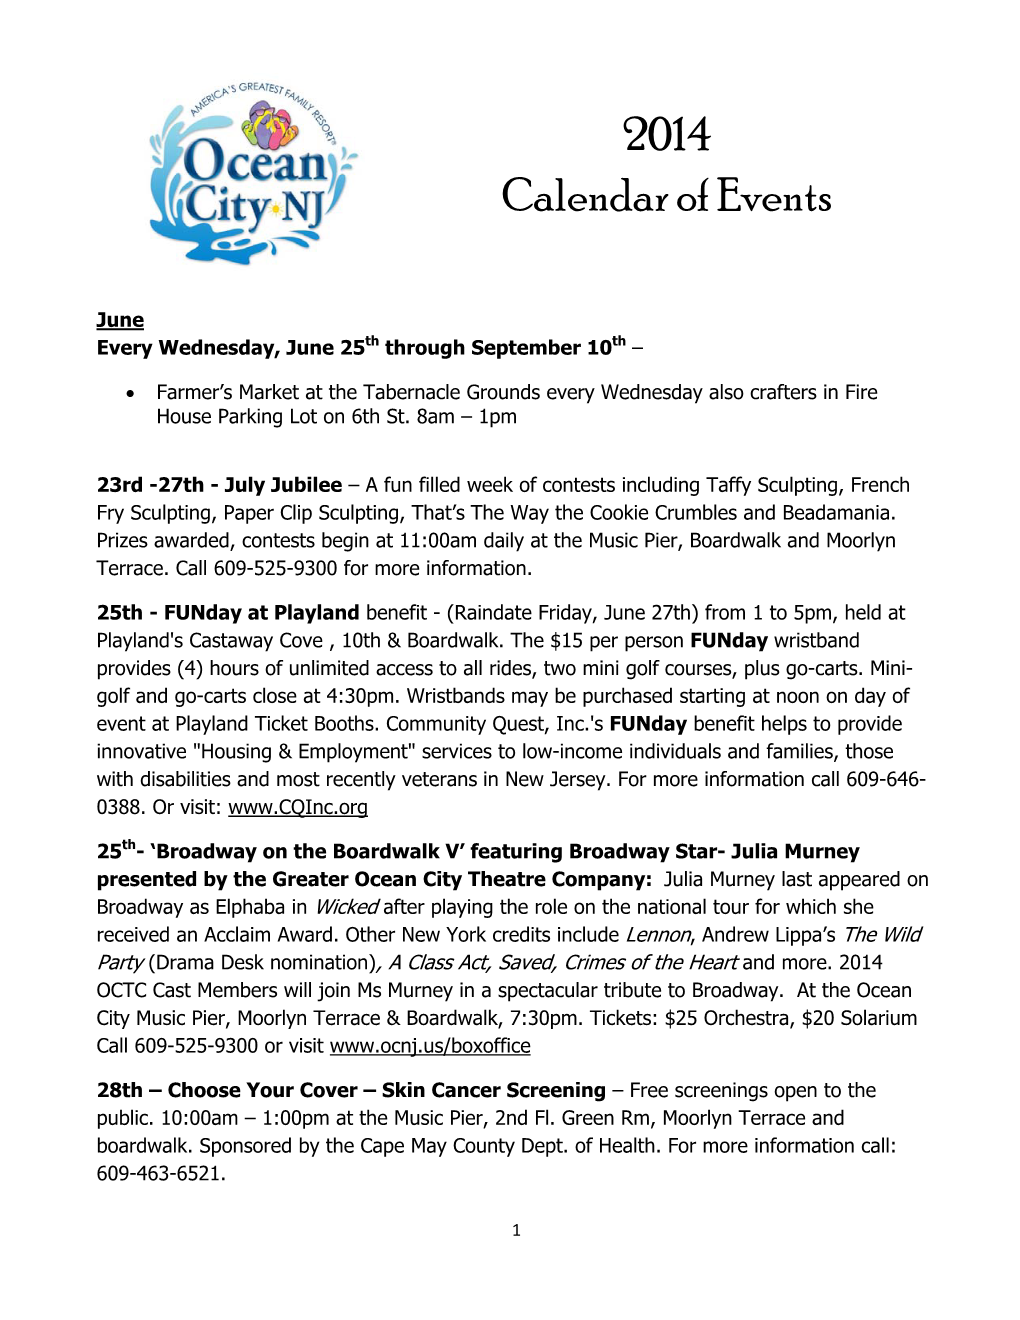 2014 Calendar of Events